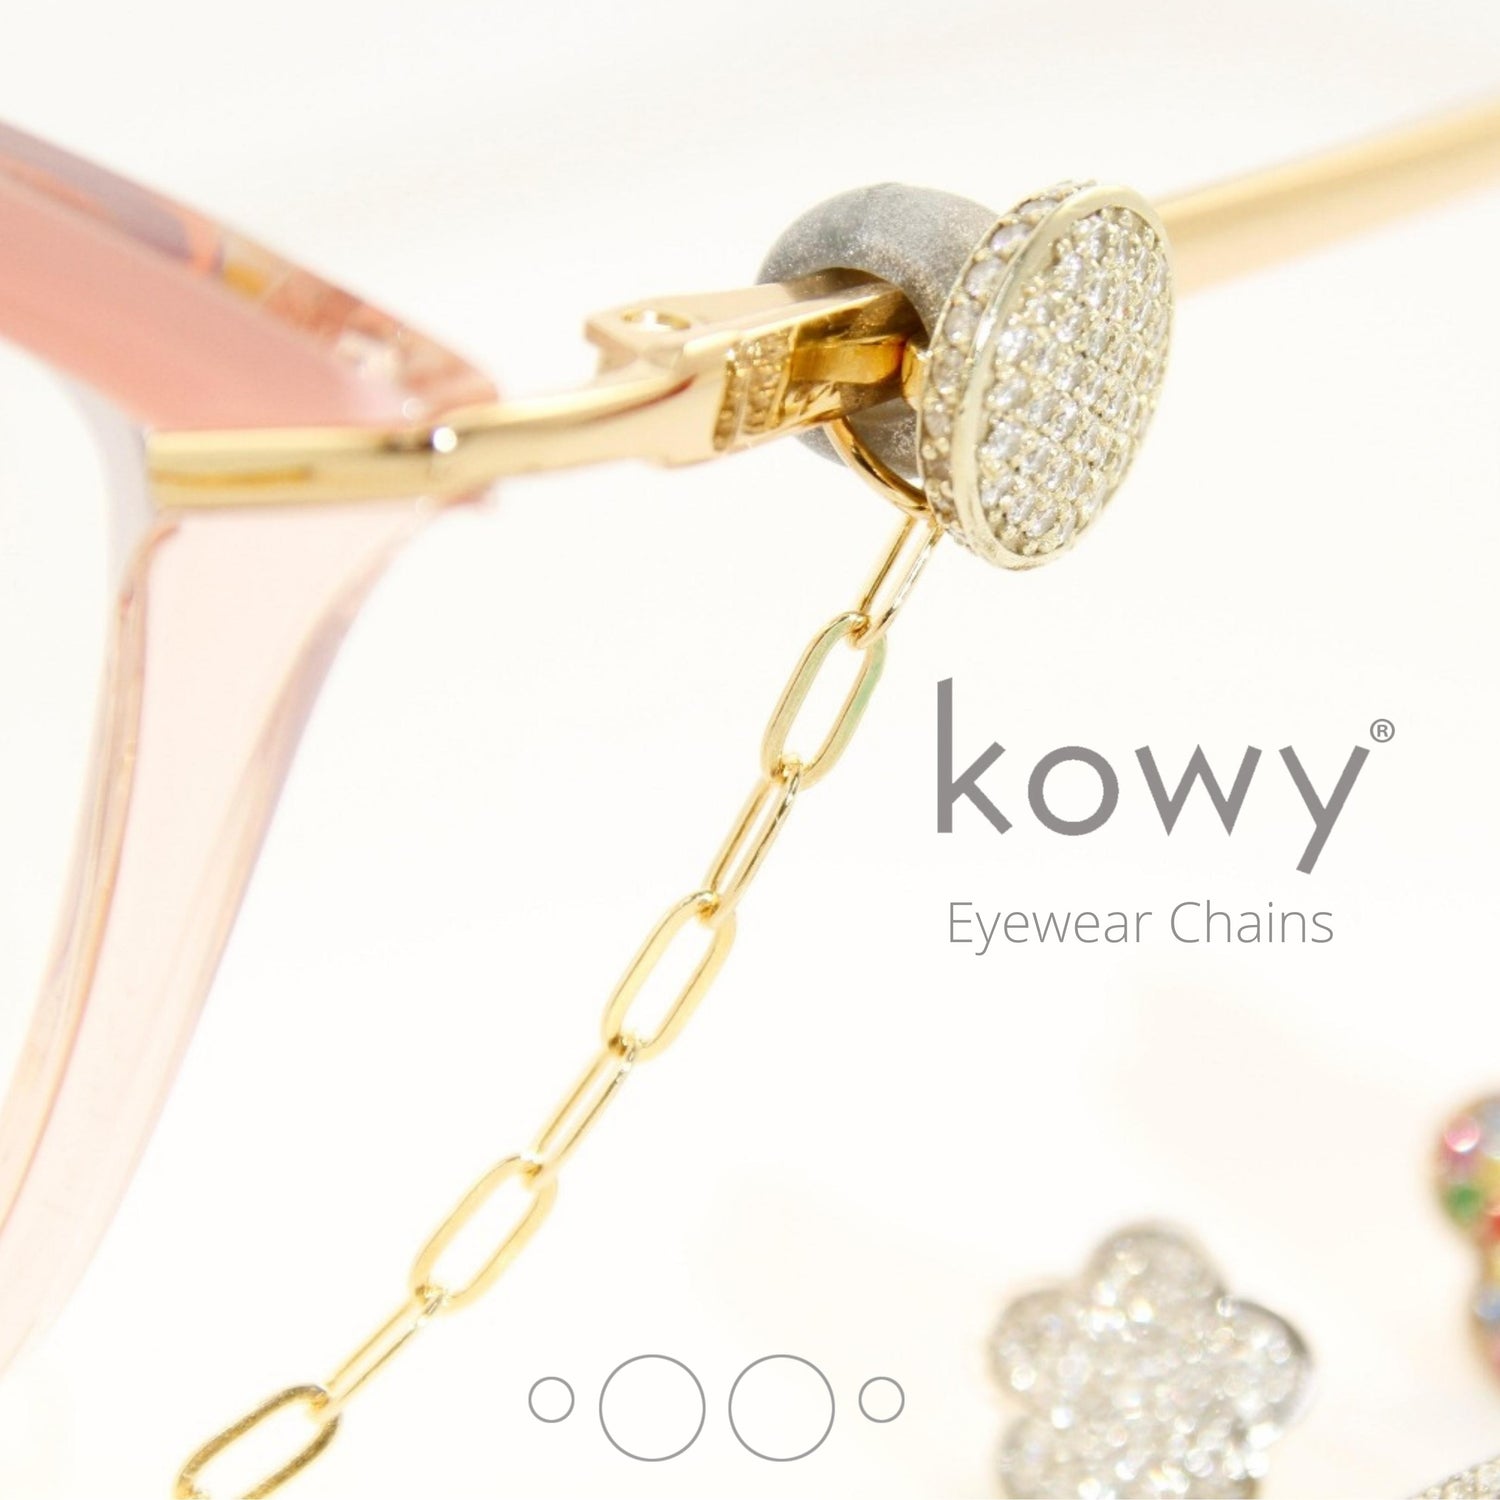 Kowy® Eyewear Chains